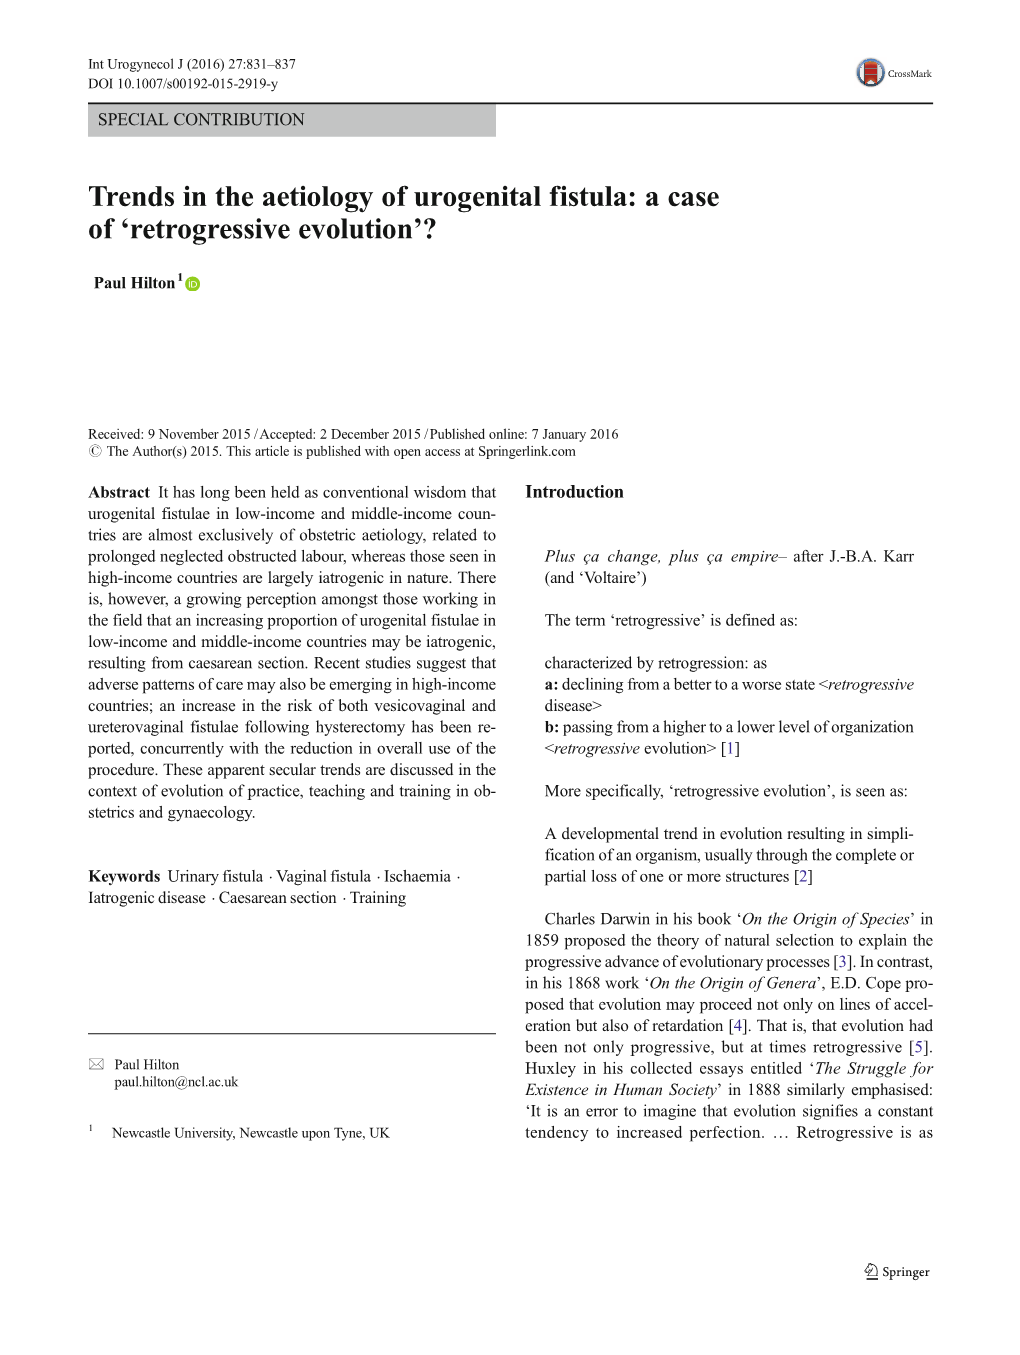 Trends in the Aetiology of Urogenital Fistula: a Case of ‘Retrogressive Evolution’?